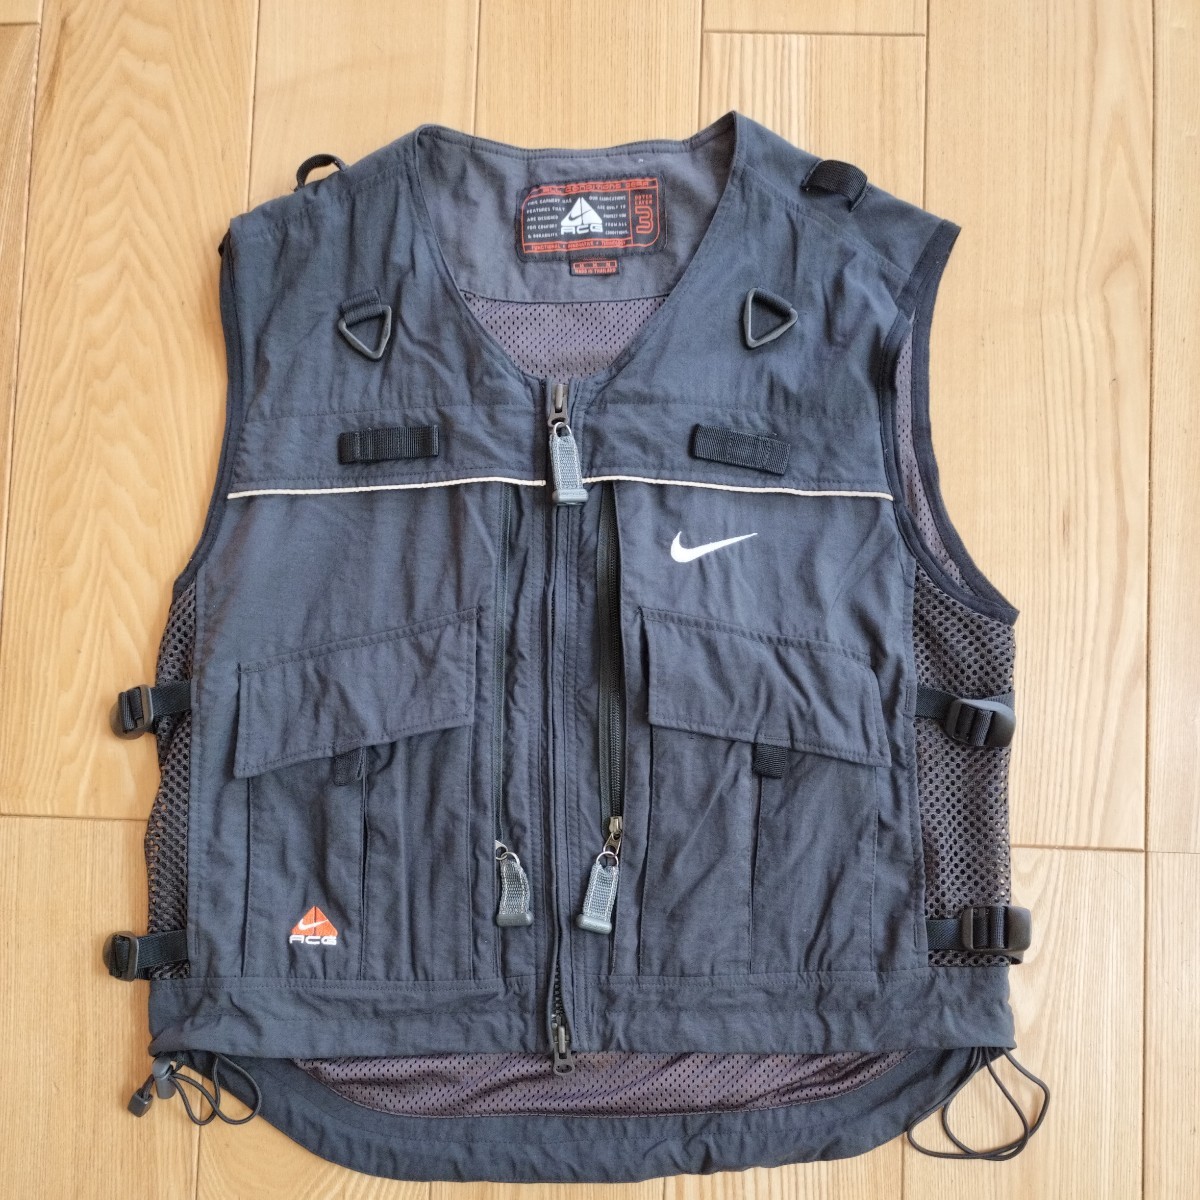 Nike ACG Utility Tactical Vest All Conditions Gear タクティカルベスト mmw sacai nocta ispa travis off white 90s 00s y2k_画像1